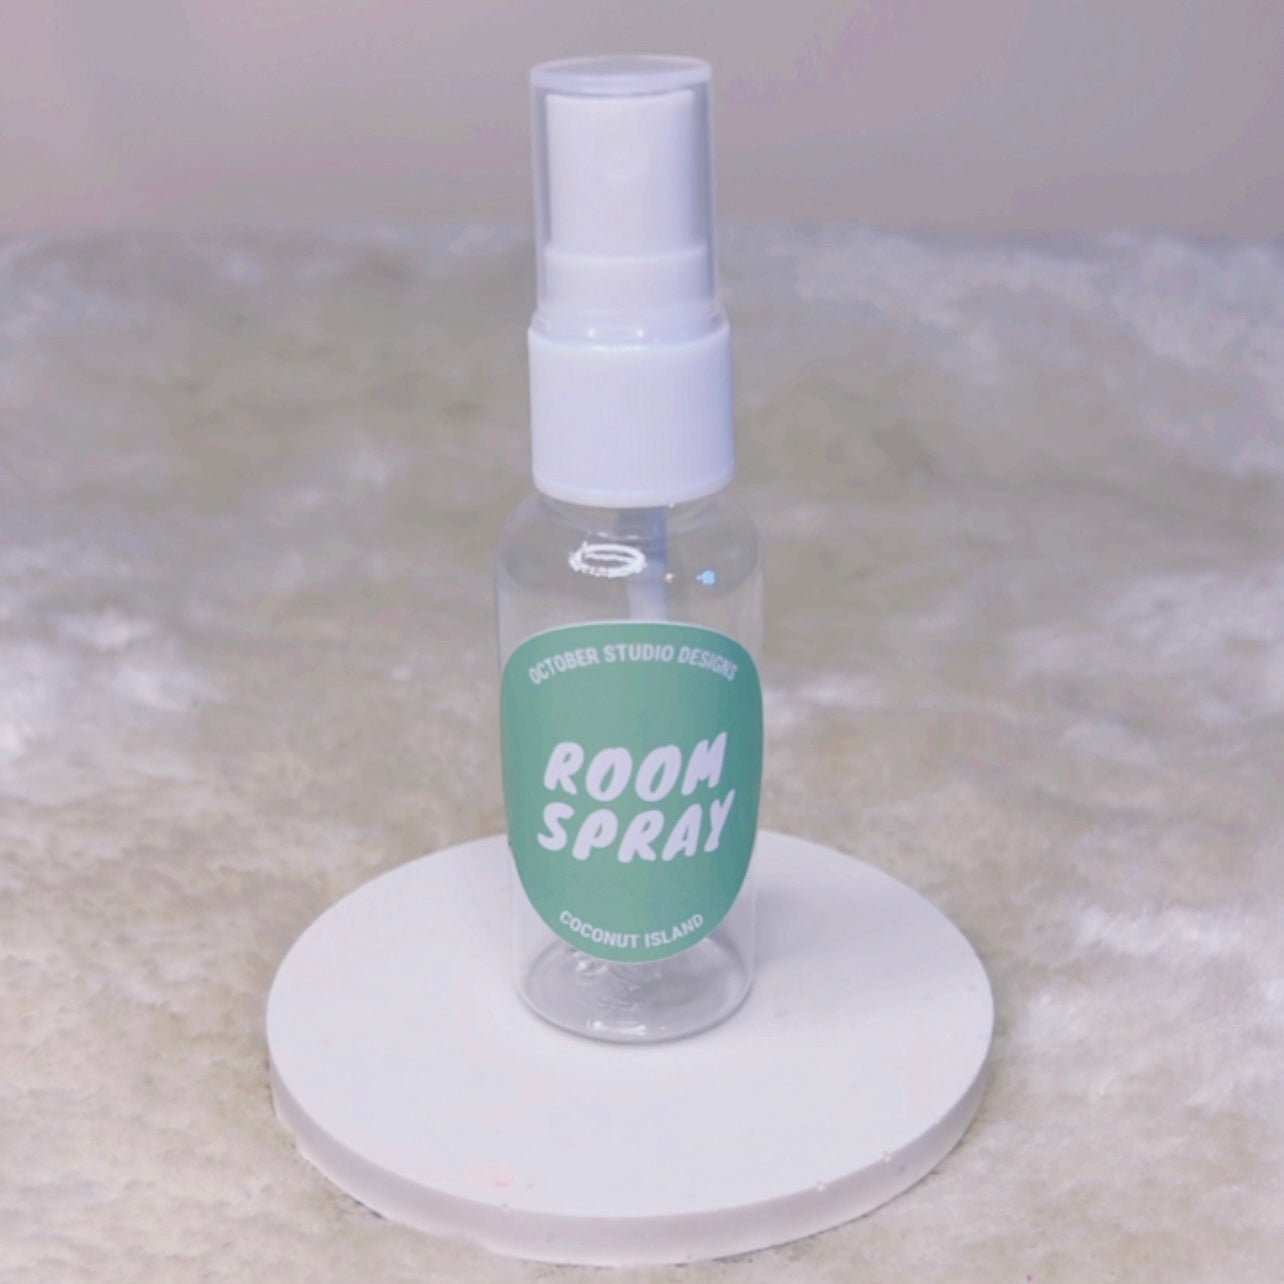 30ml Room Spray Sample